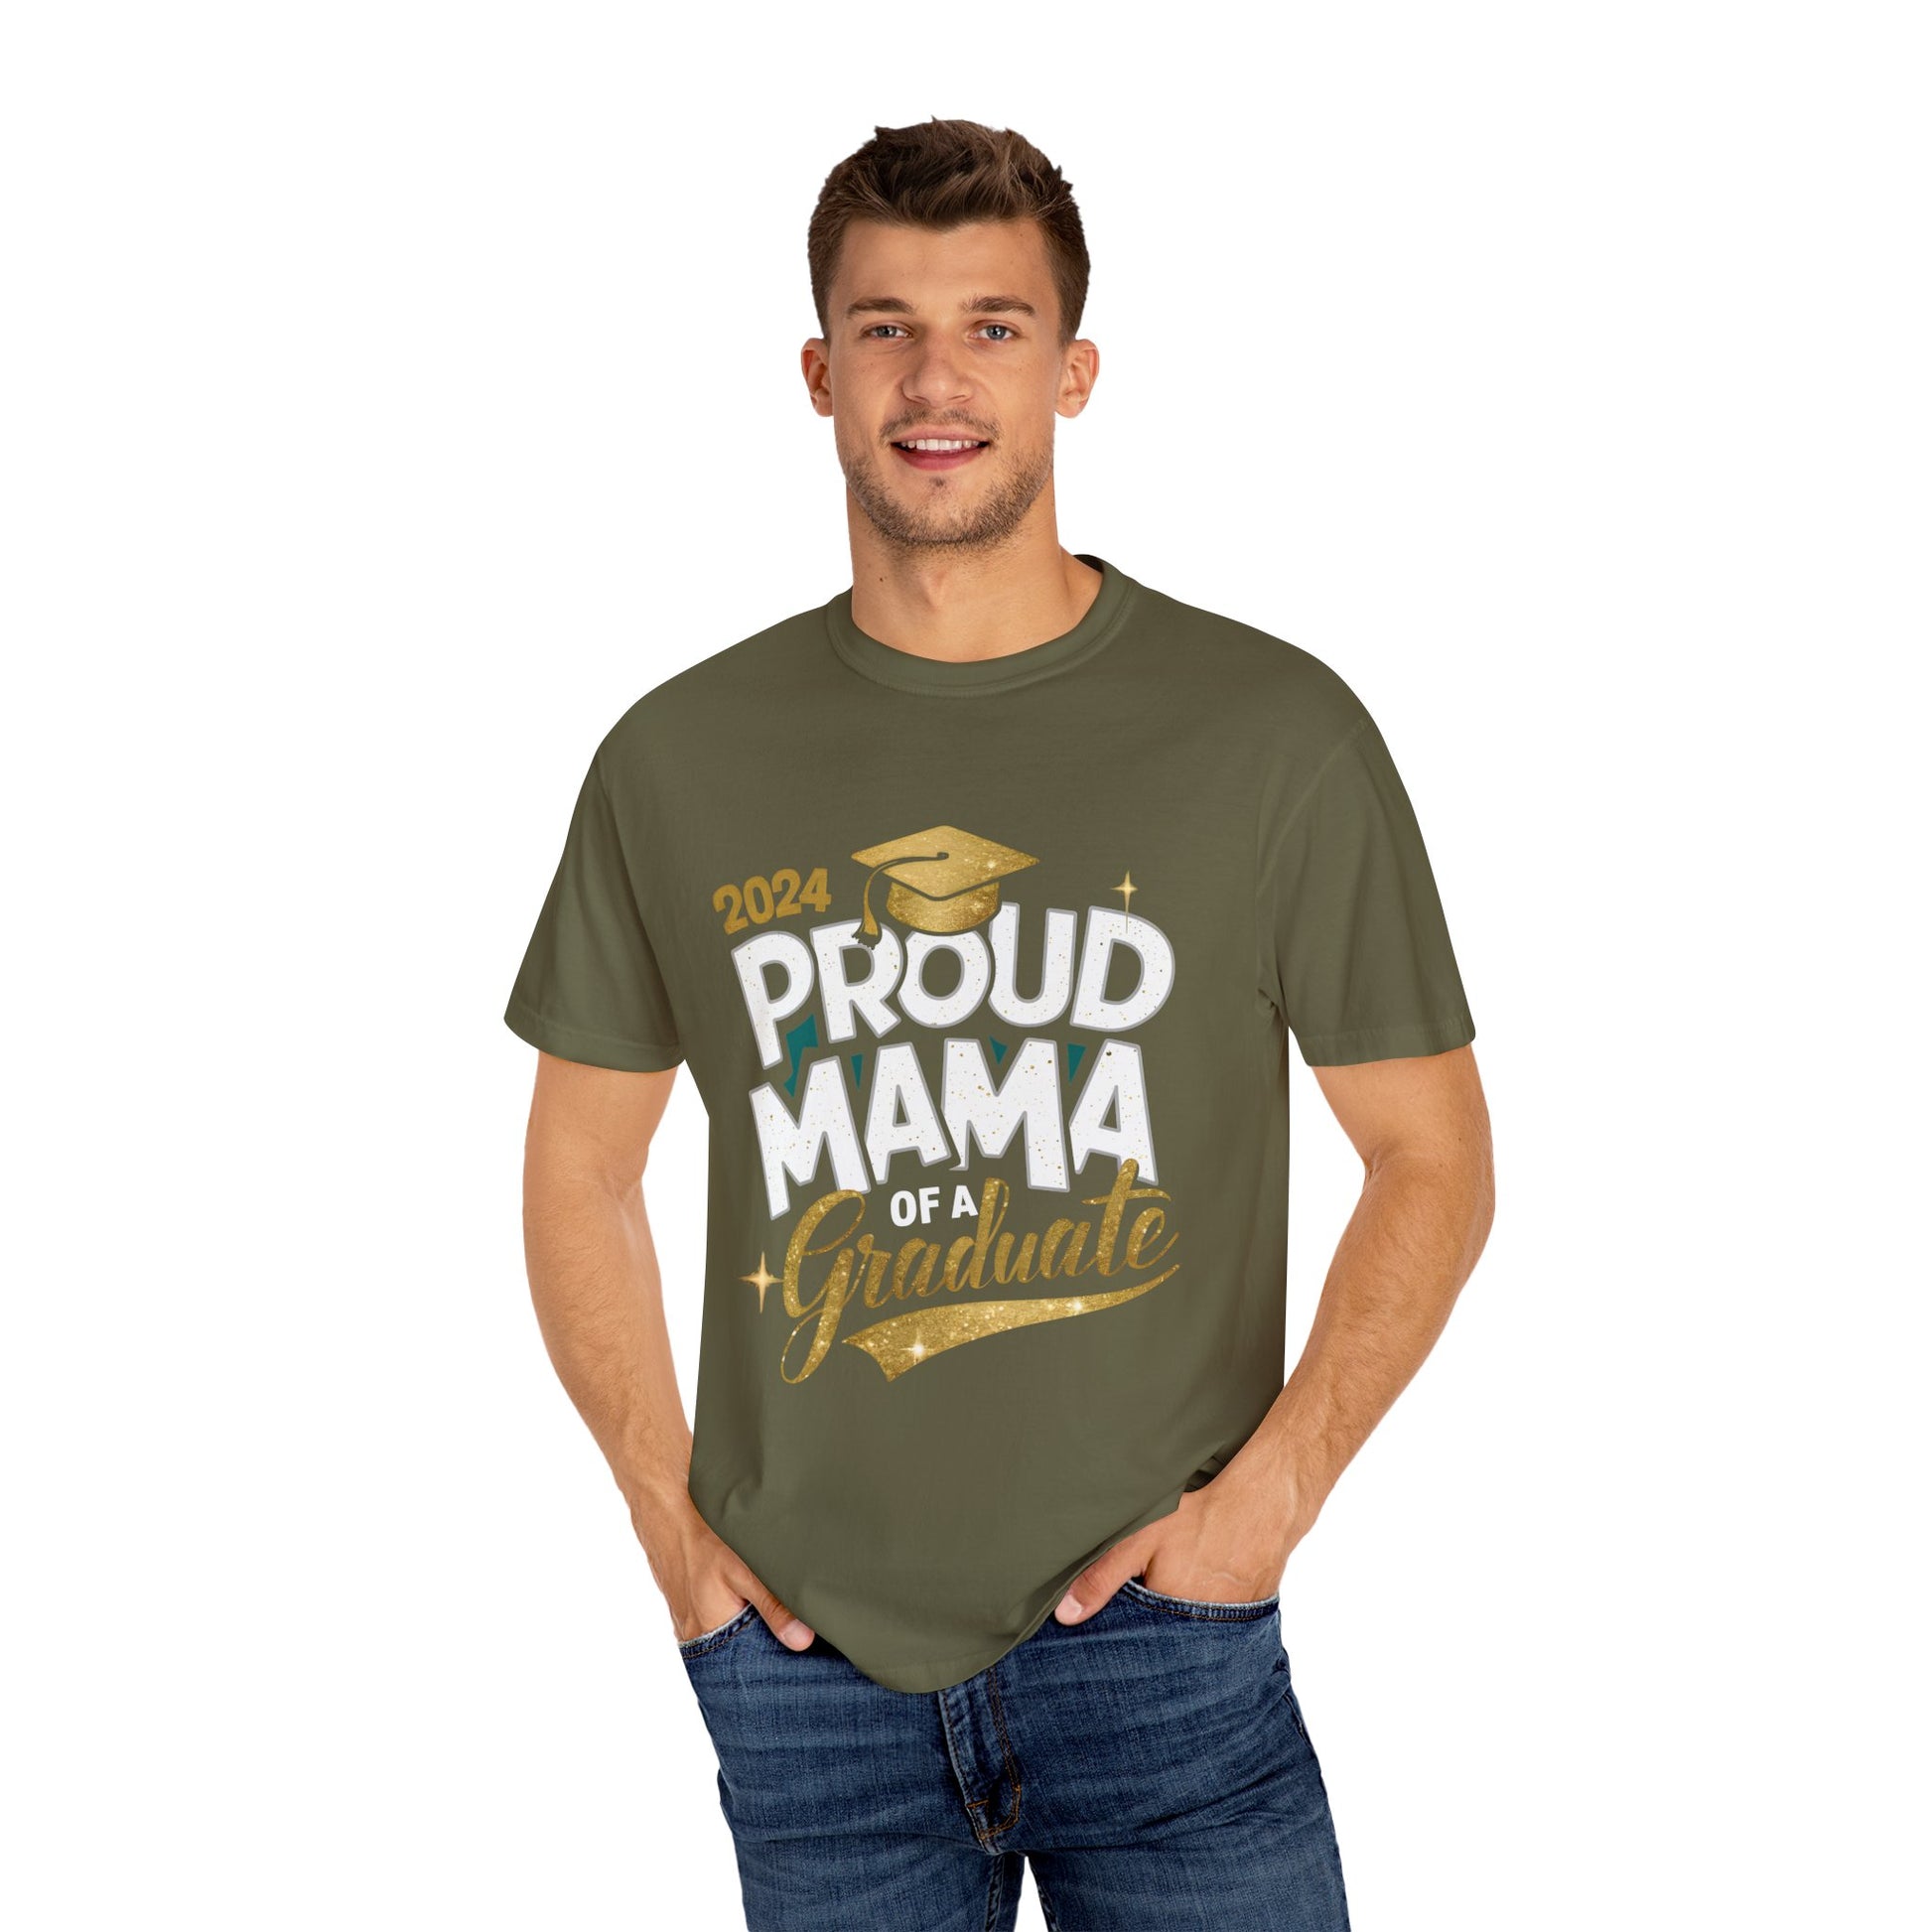 Proud Mama of a 2024 Graduate Unisex Garment-dyed T-shirt Cotton Funny Humorous Graphic Soft Premium Unisex Men Women Sage T-shirt Birthday Gift-54